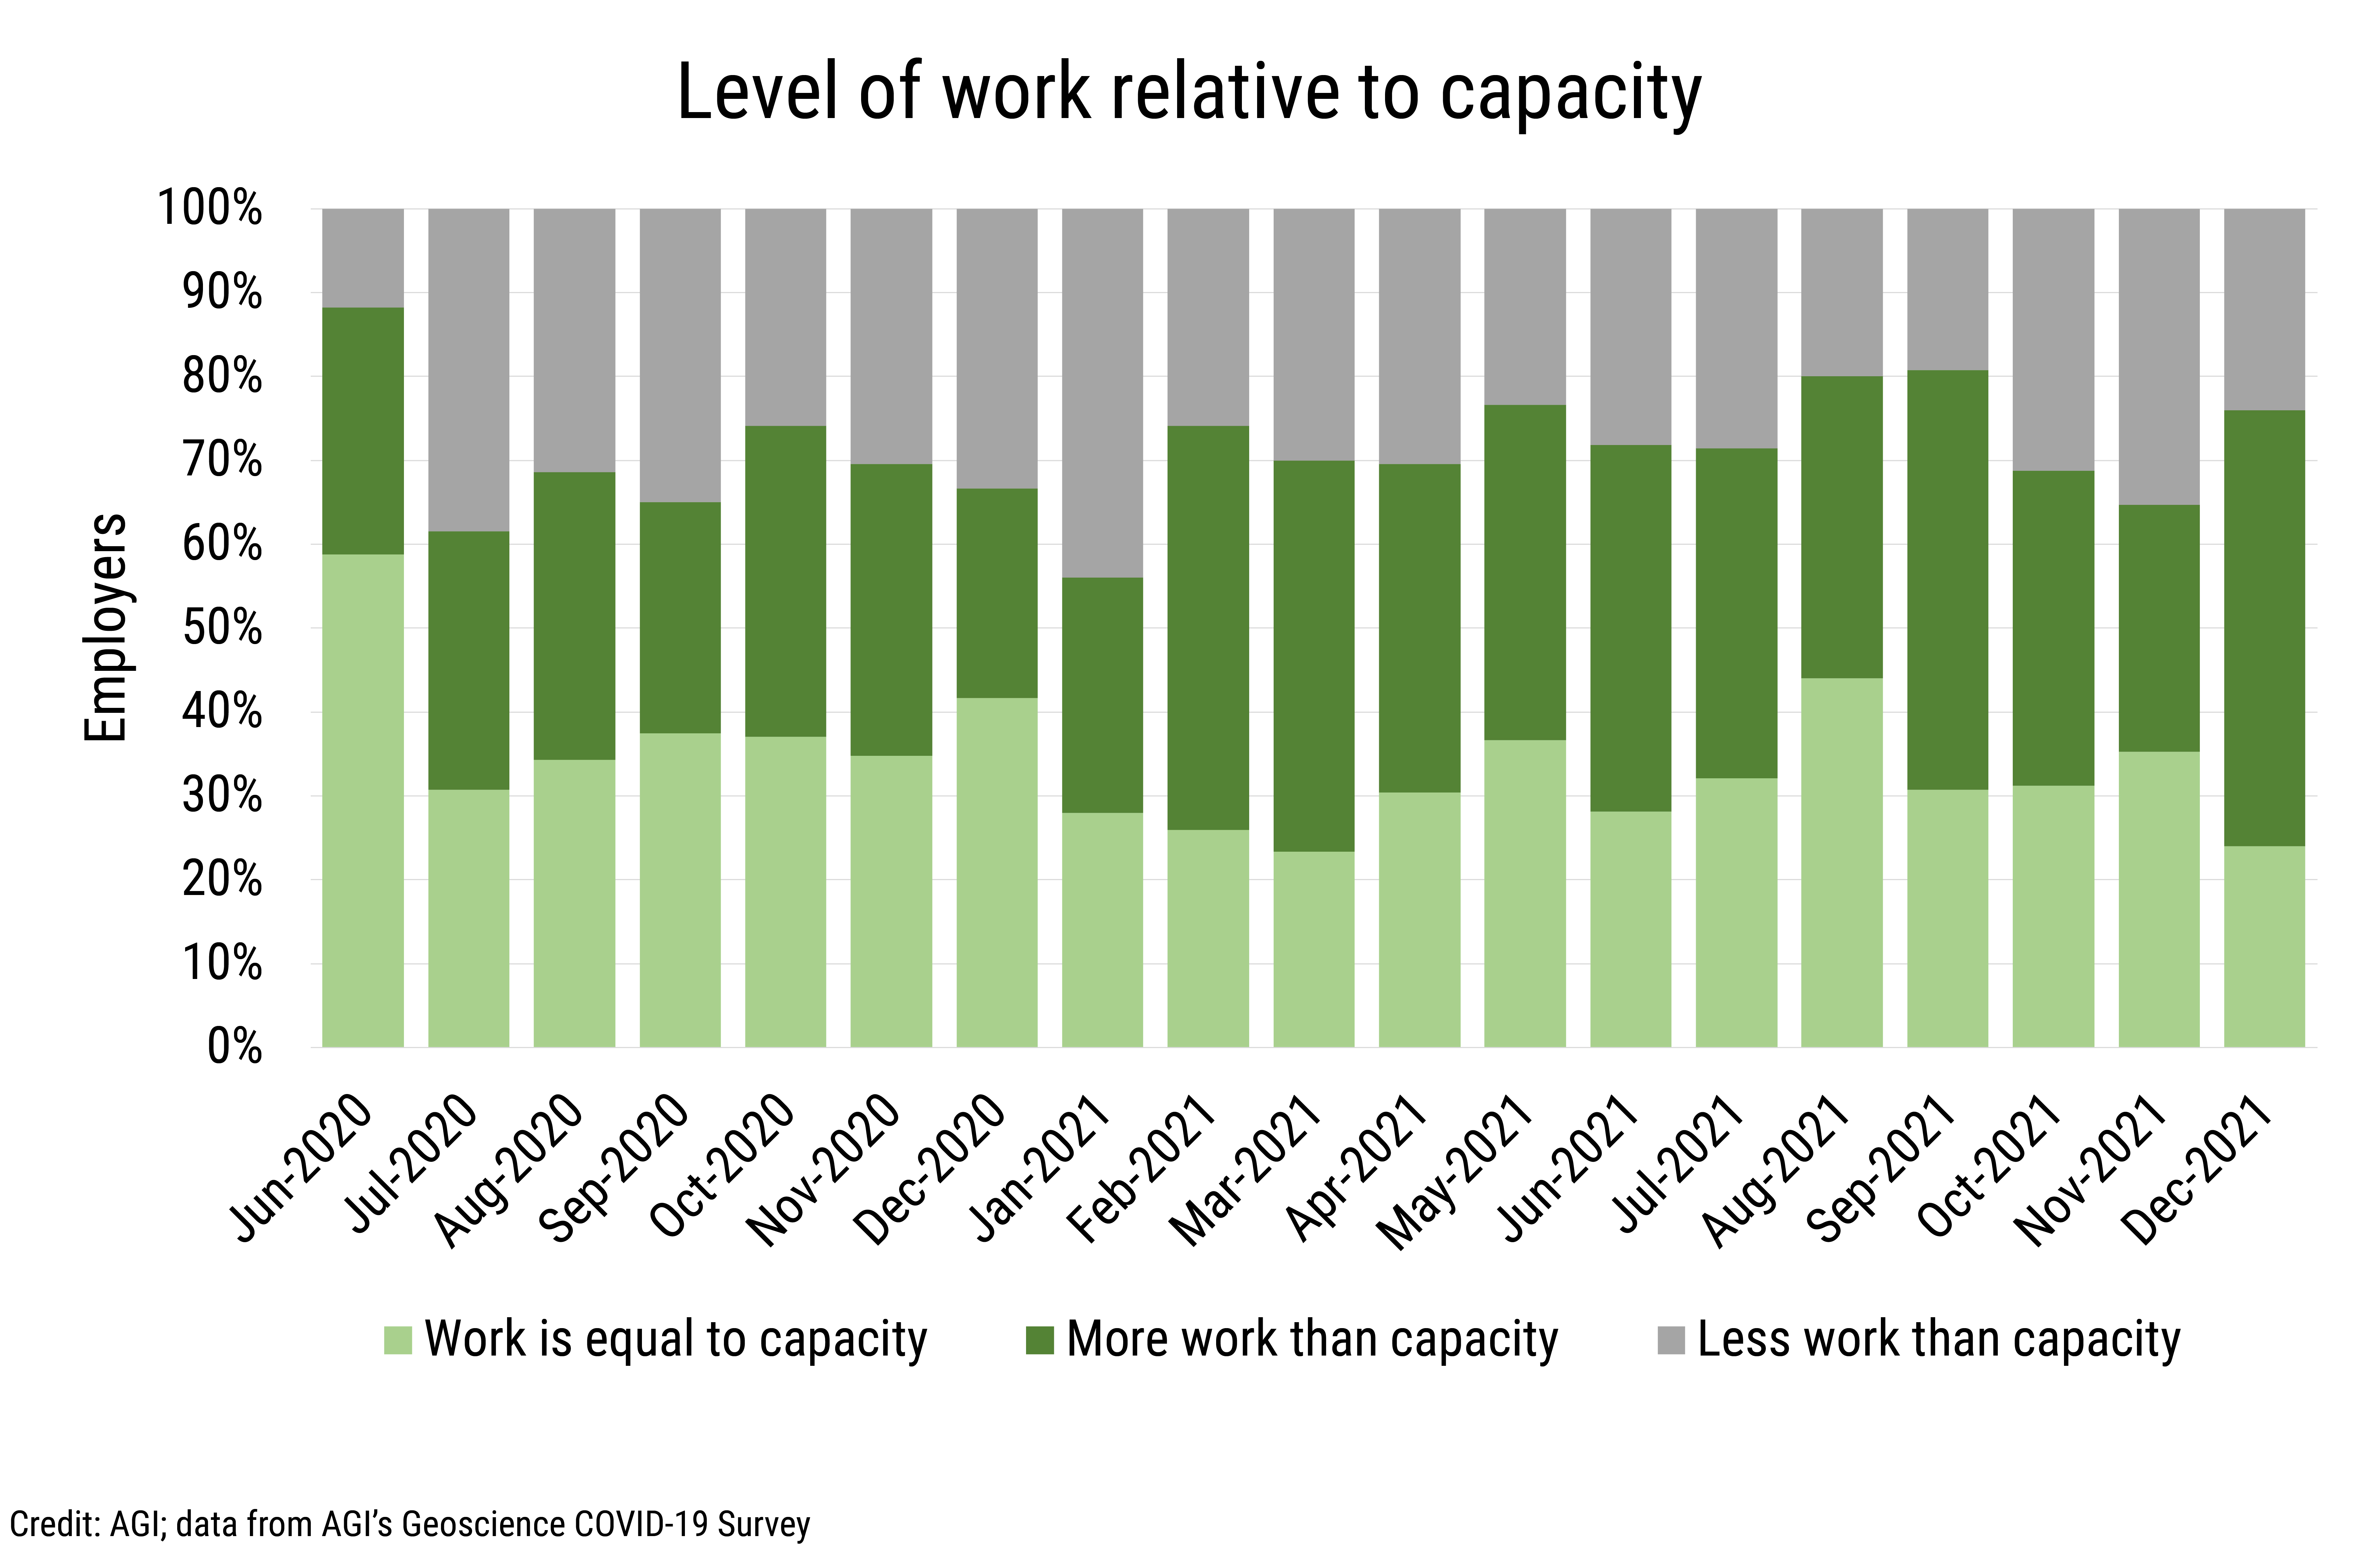 DB_2022-002 chart 03: Level of work relative to capacity (Credit: AGI; data from AGI's Geoscience COVID-19 Survey)